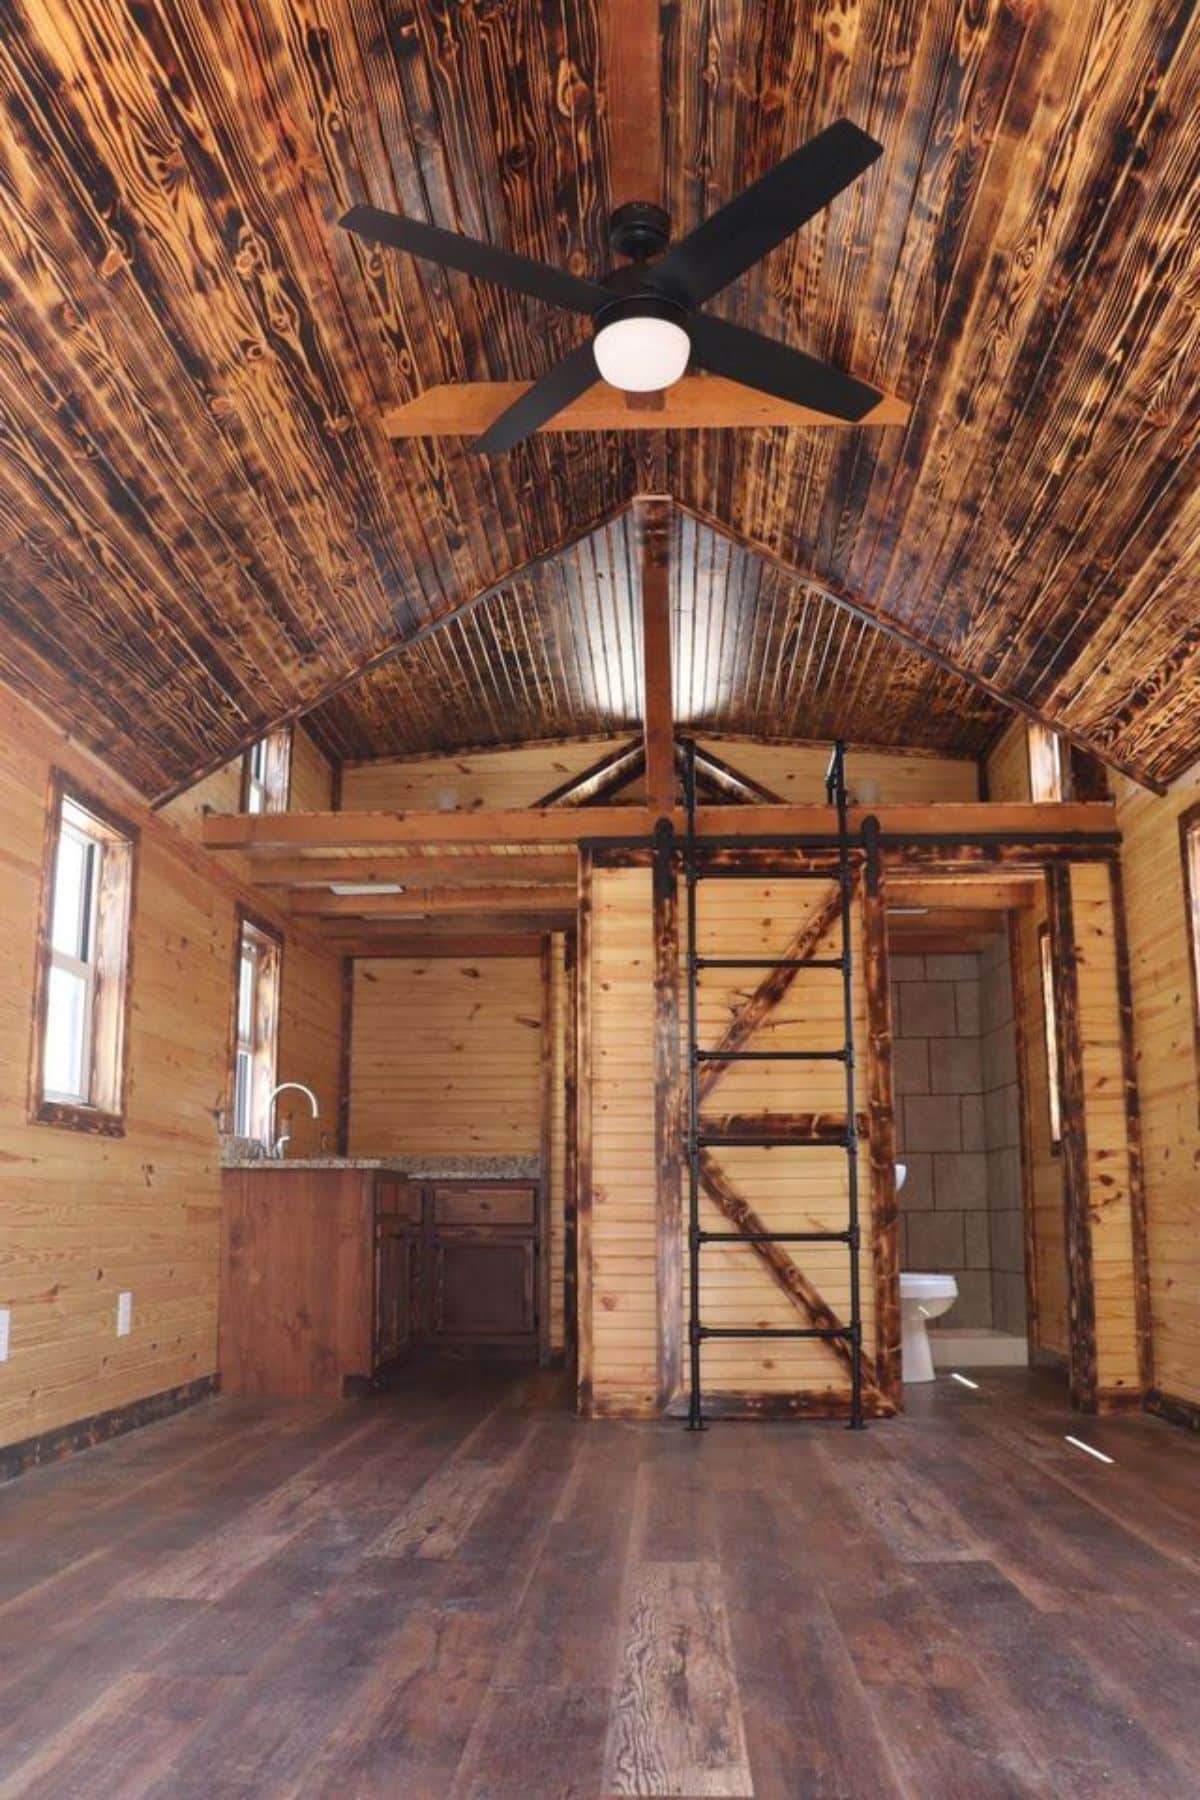 Kitchen area of 24’ Tiny Cabin in Missouri